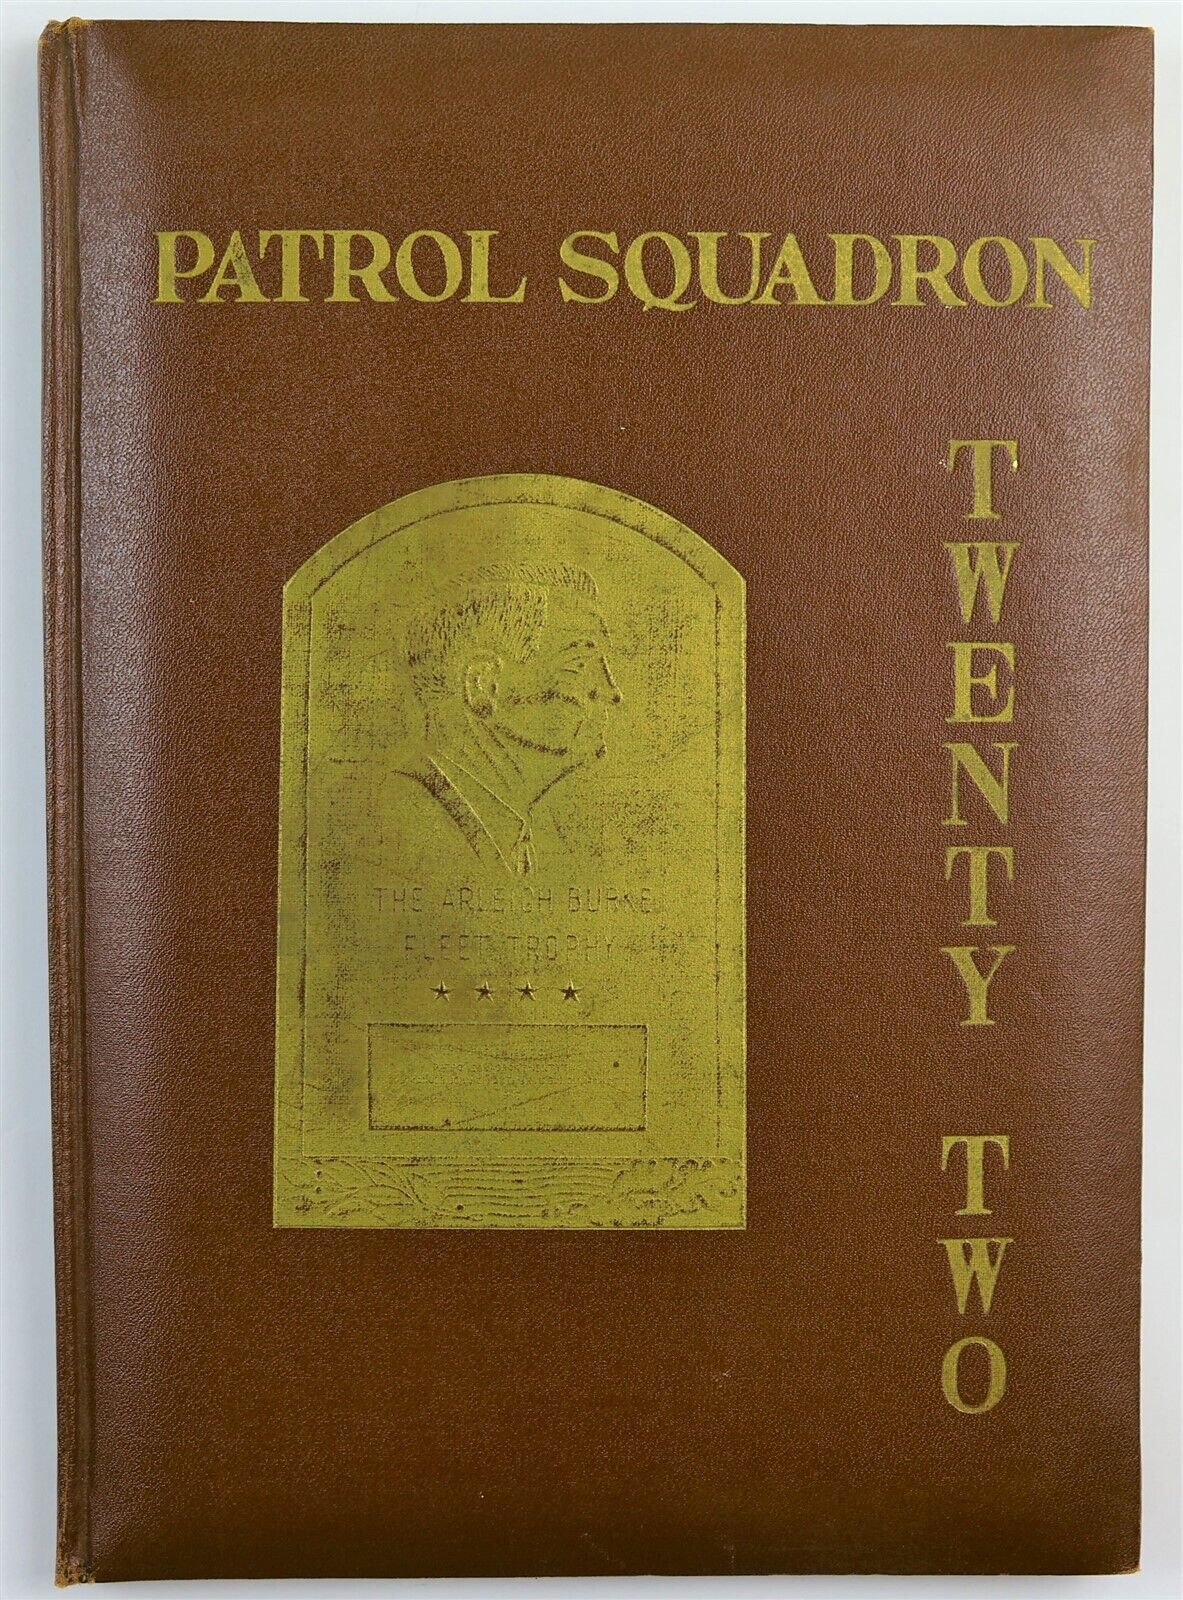 Patrol Squadron Twenty-Two (VP-22) 1963 1964 Westpac Deployment Cruise Book